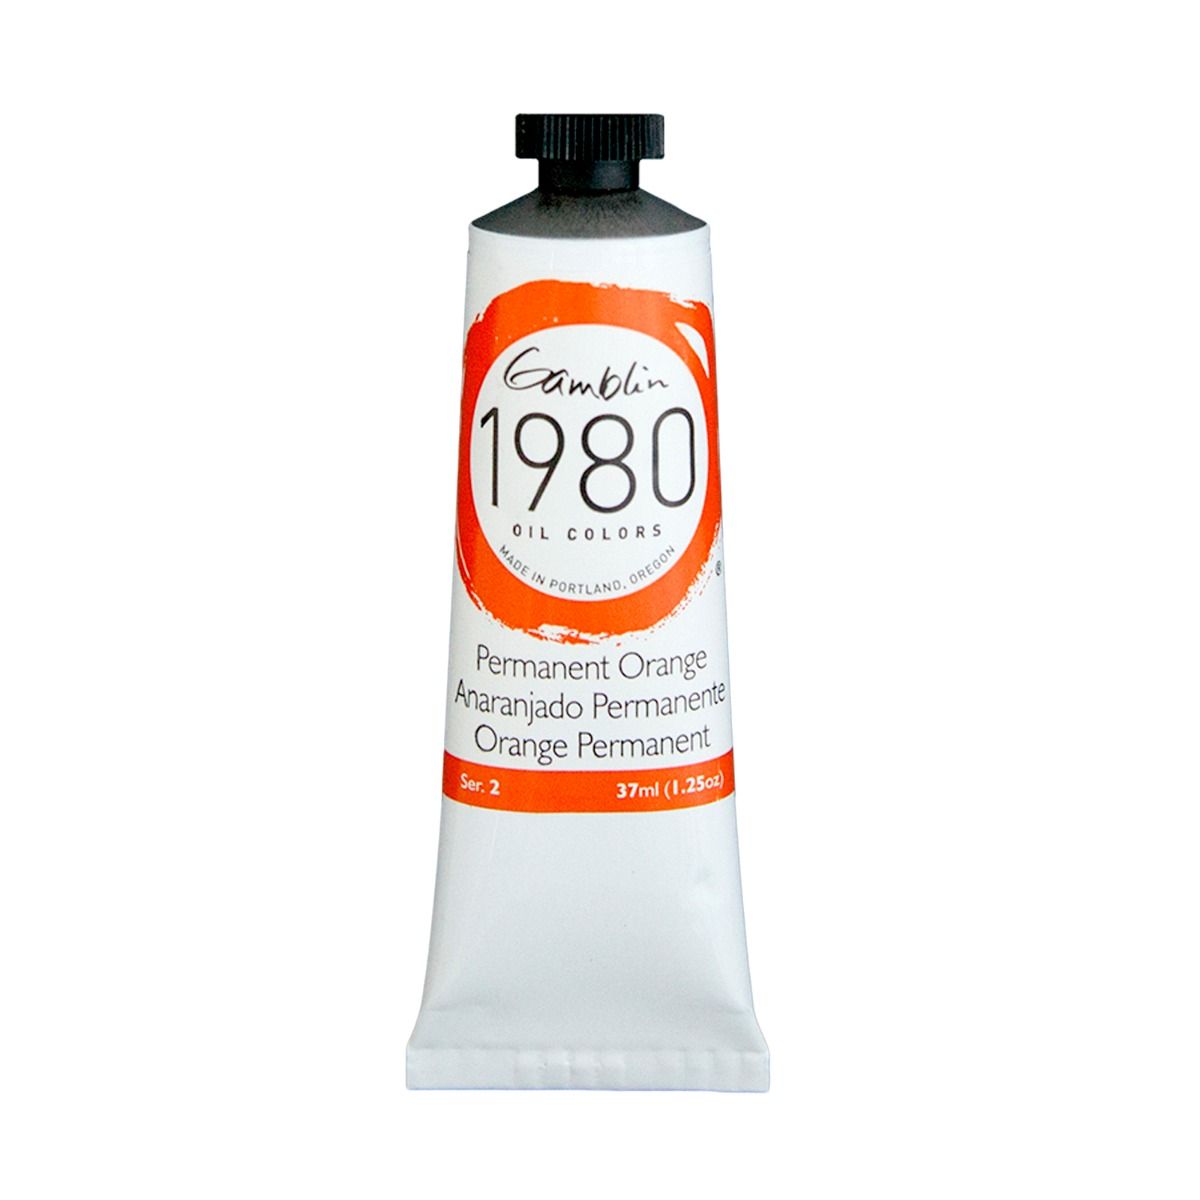 Gamblin 1980 Oils - Permanent Orange, 37 ml (1.25oz)